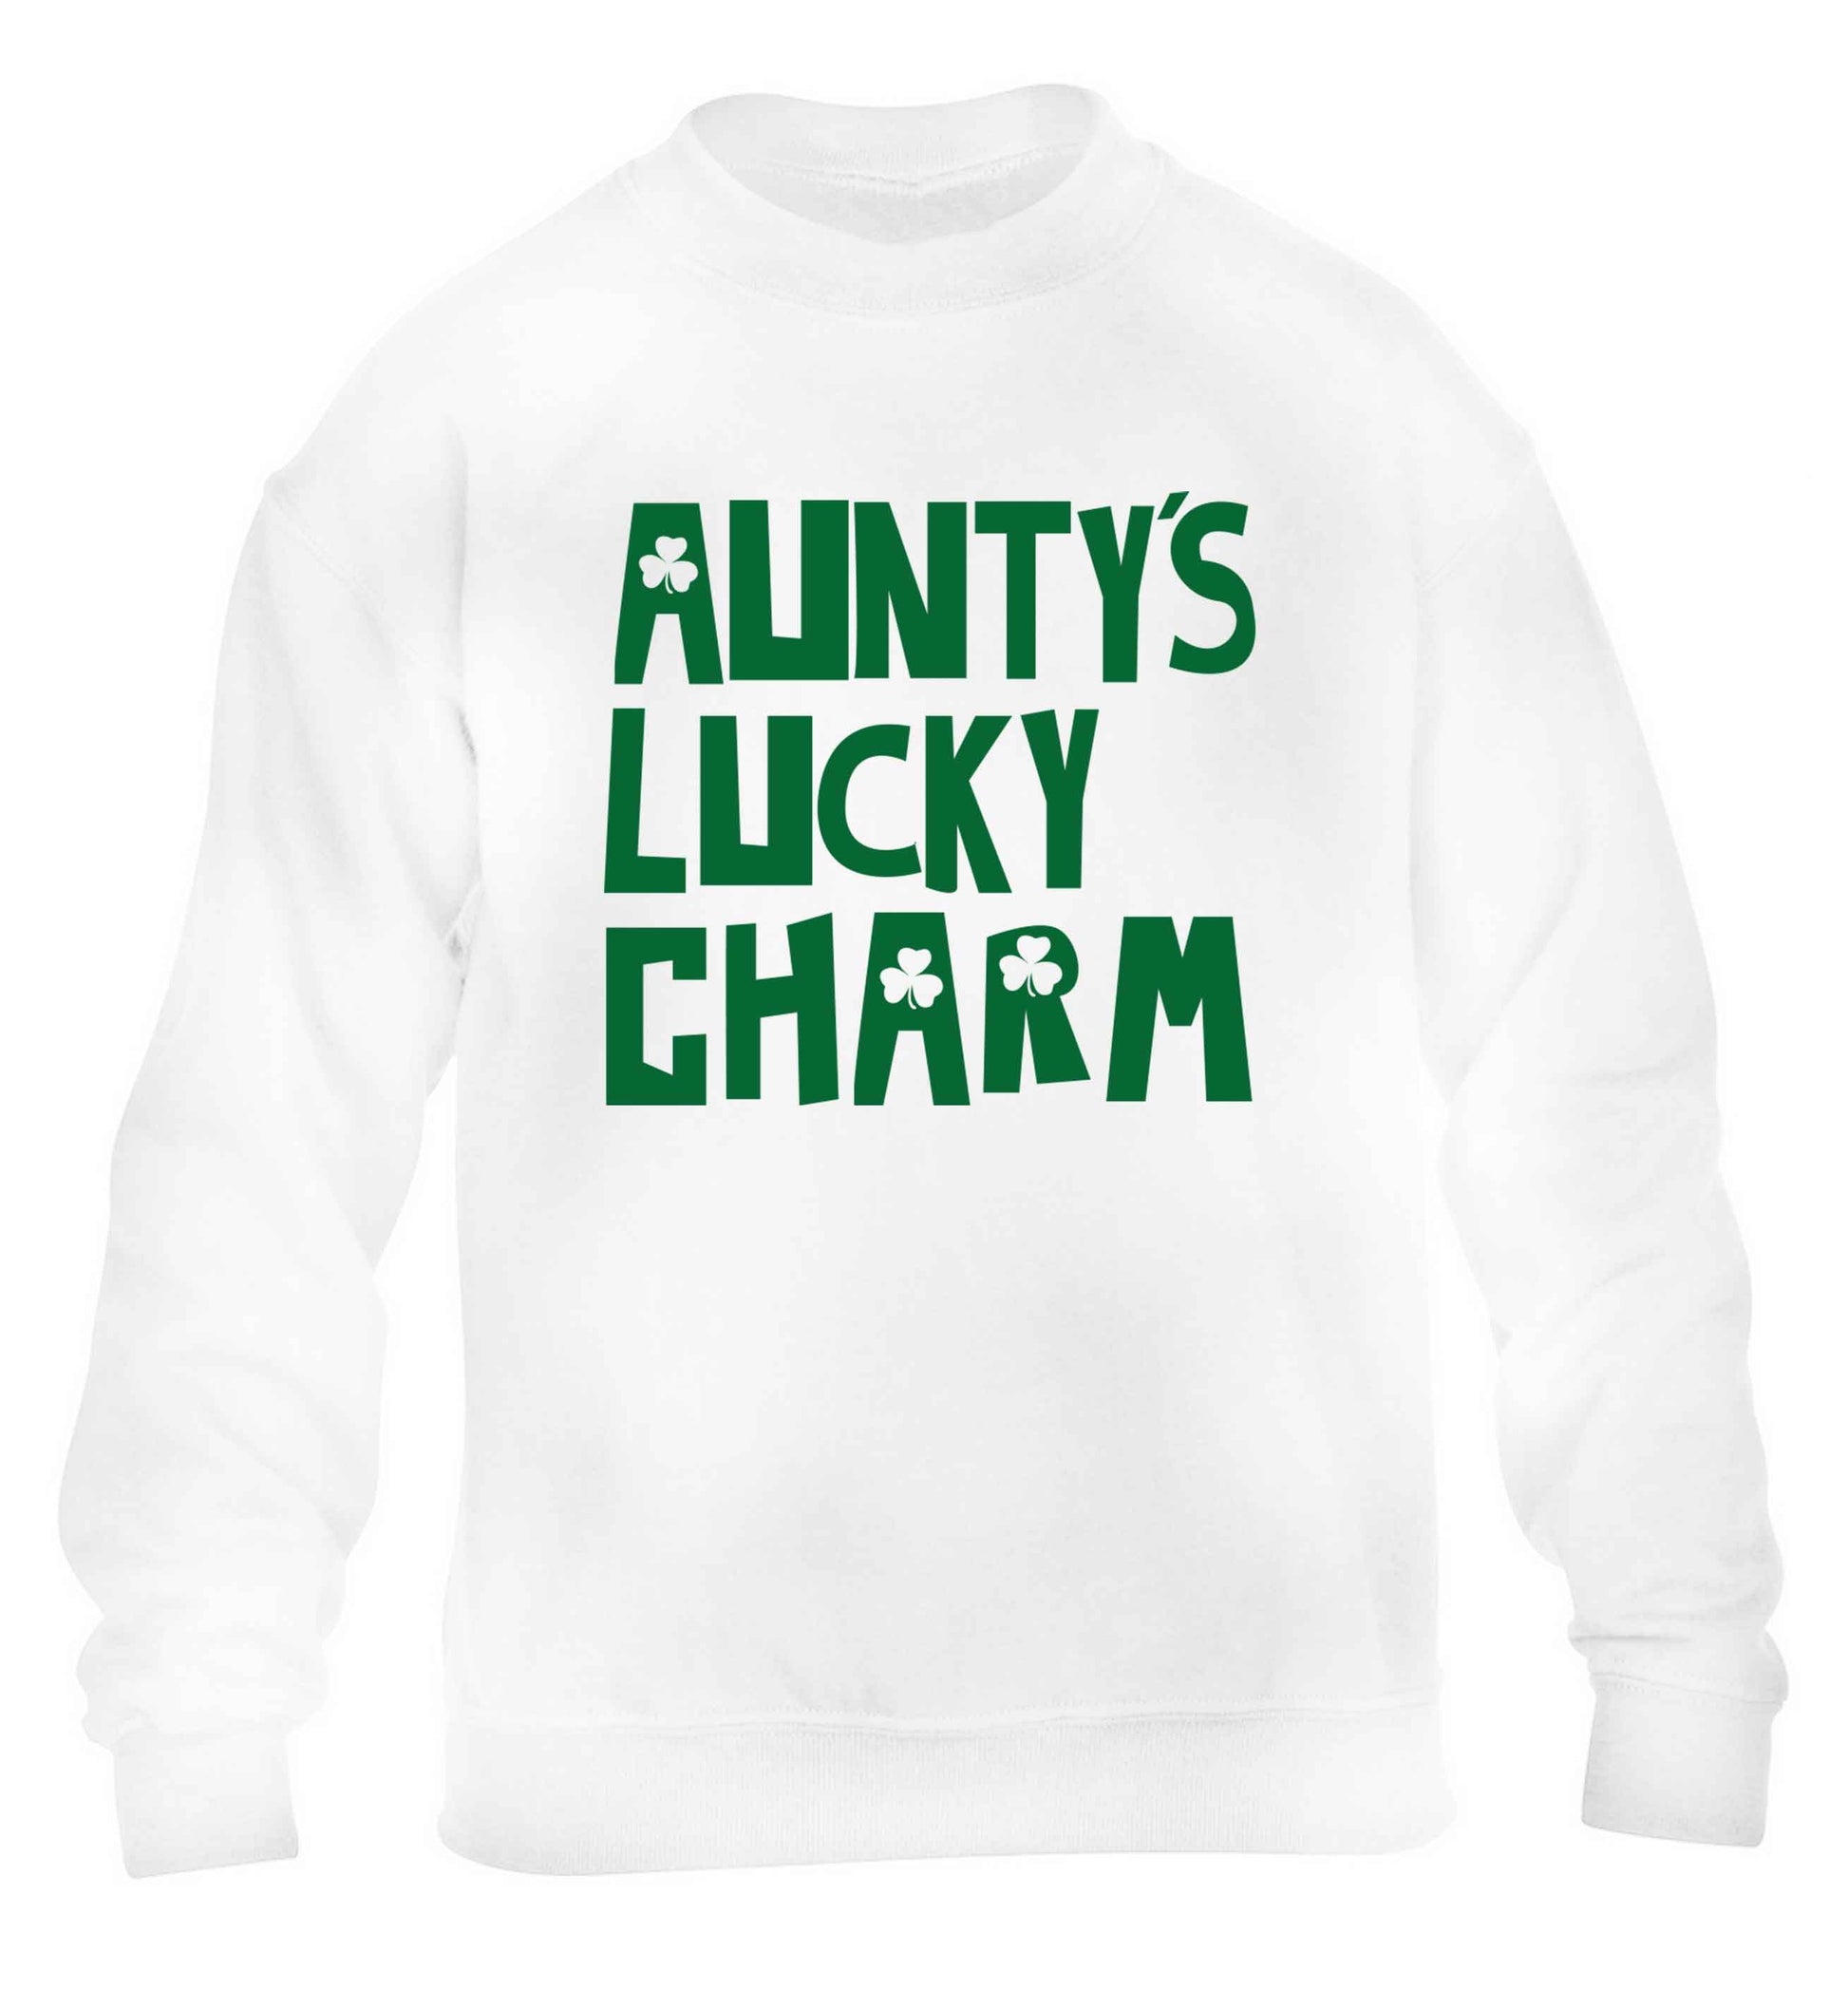 Aunty's lucky charm children's white sweater 12-13 Years